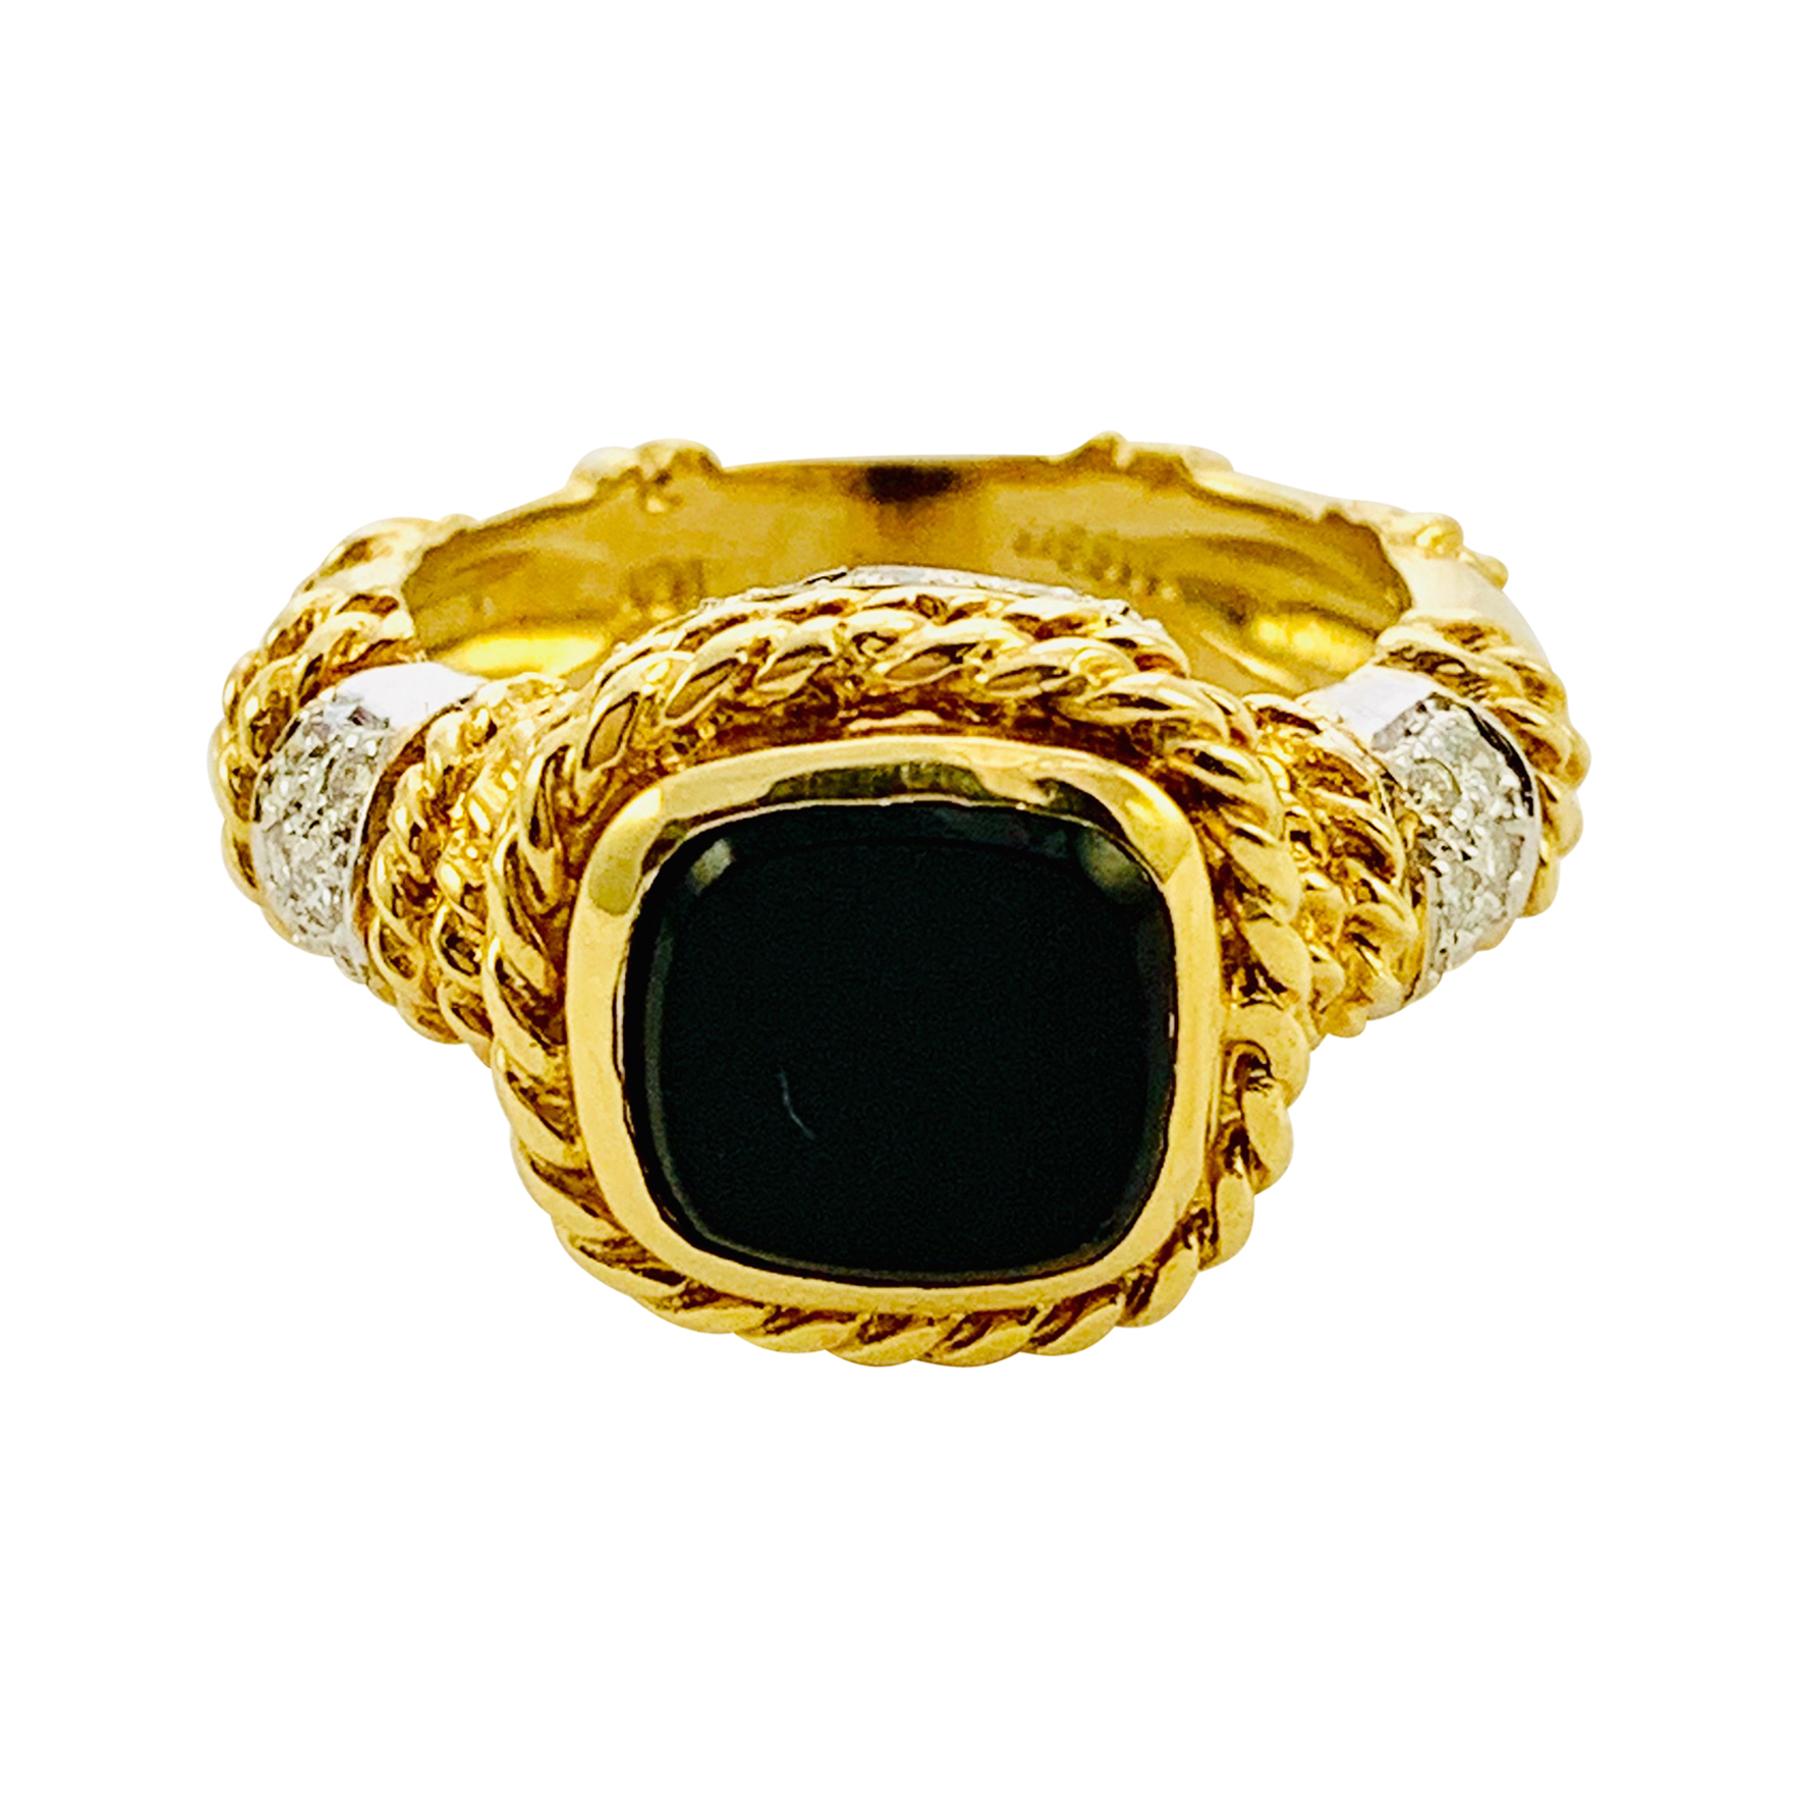 Designer Cassis 18K yellow Gold, Diamond & Onyx ladies Ring Size 5.75 